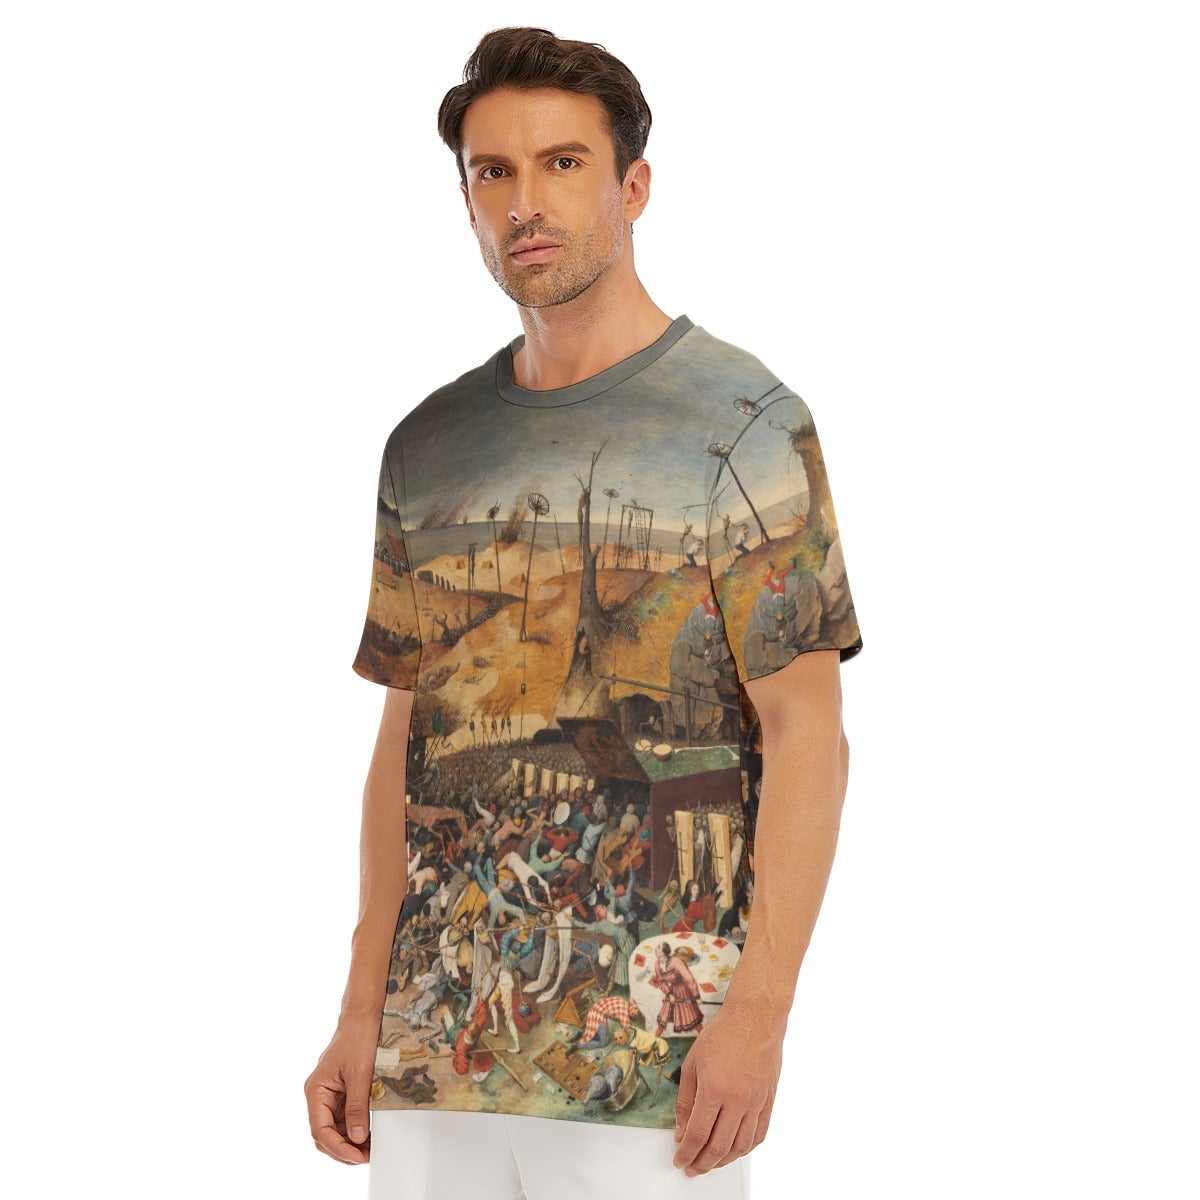 The Triumph of Death 1562 version T-Shirt